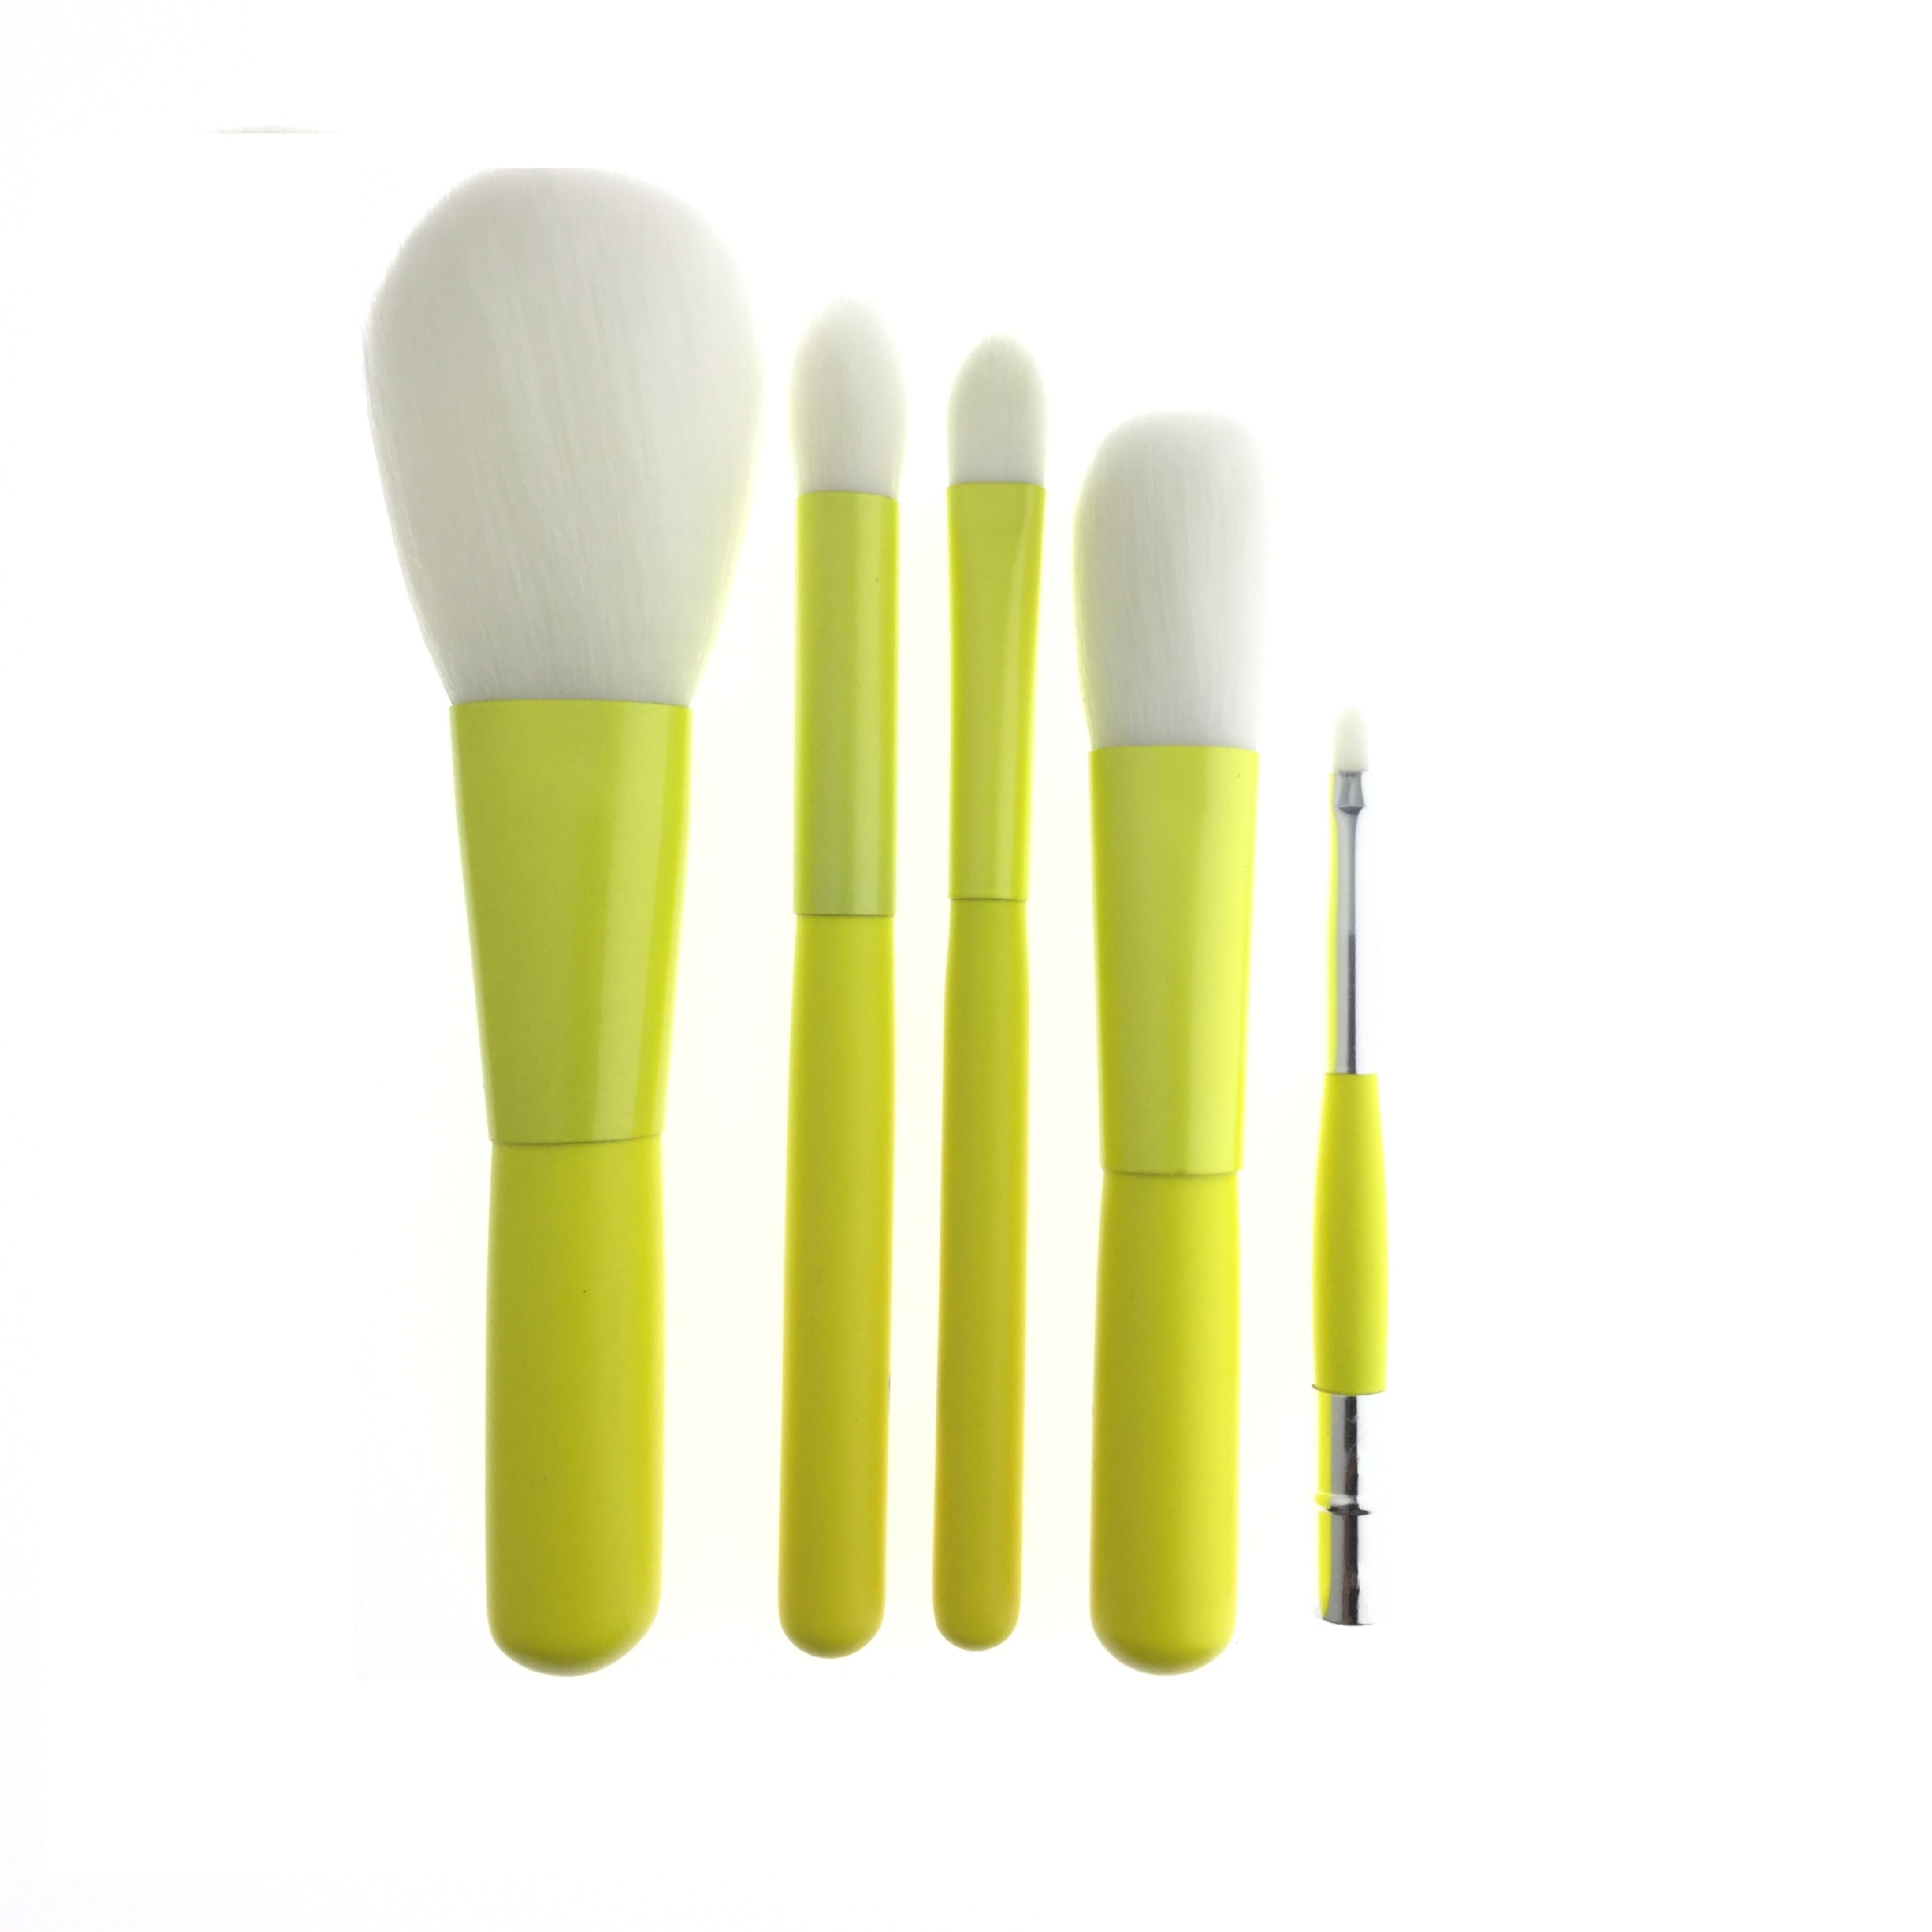 5-teiliges Make-up-Pinsel-Set mit gelbem Griff 